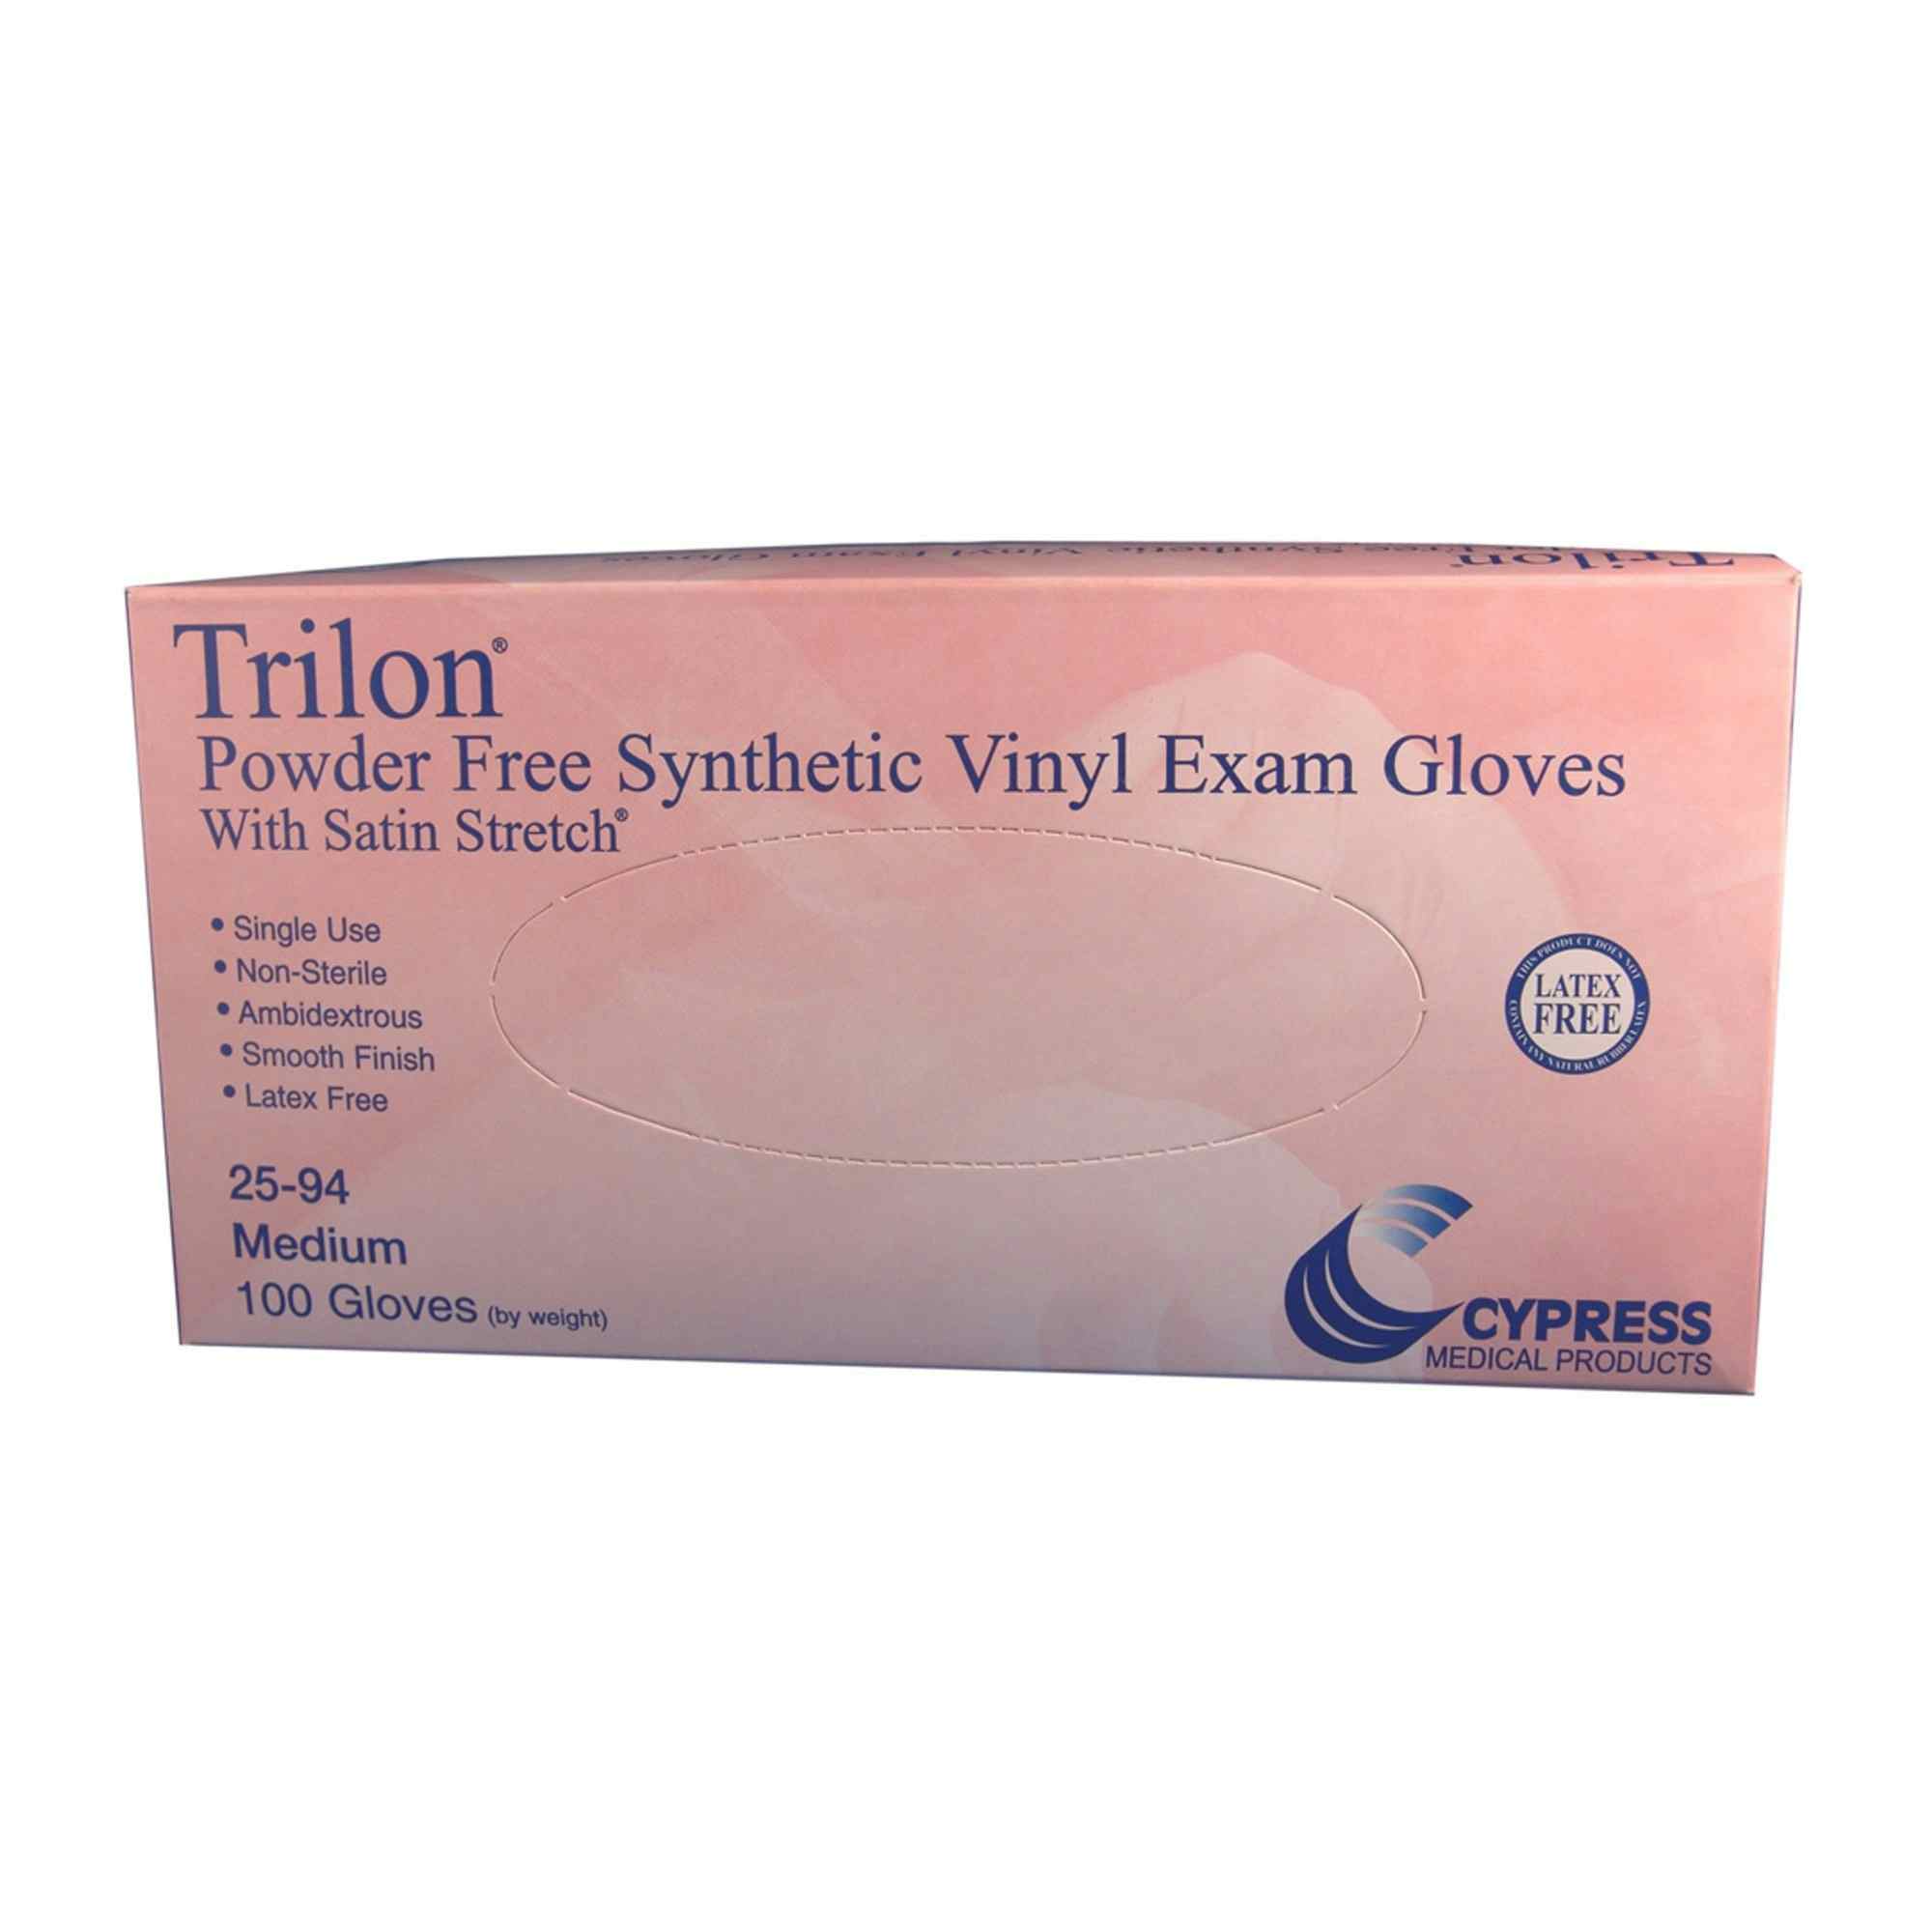 Trilon Powder Free Synthetic Vinyl Exam Glove, Clear, 25-94, Medium - Case of 1000